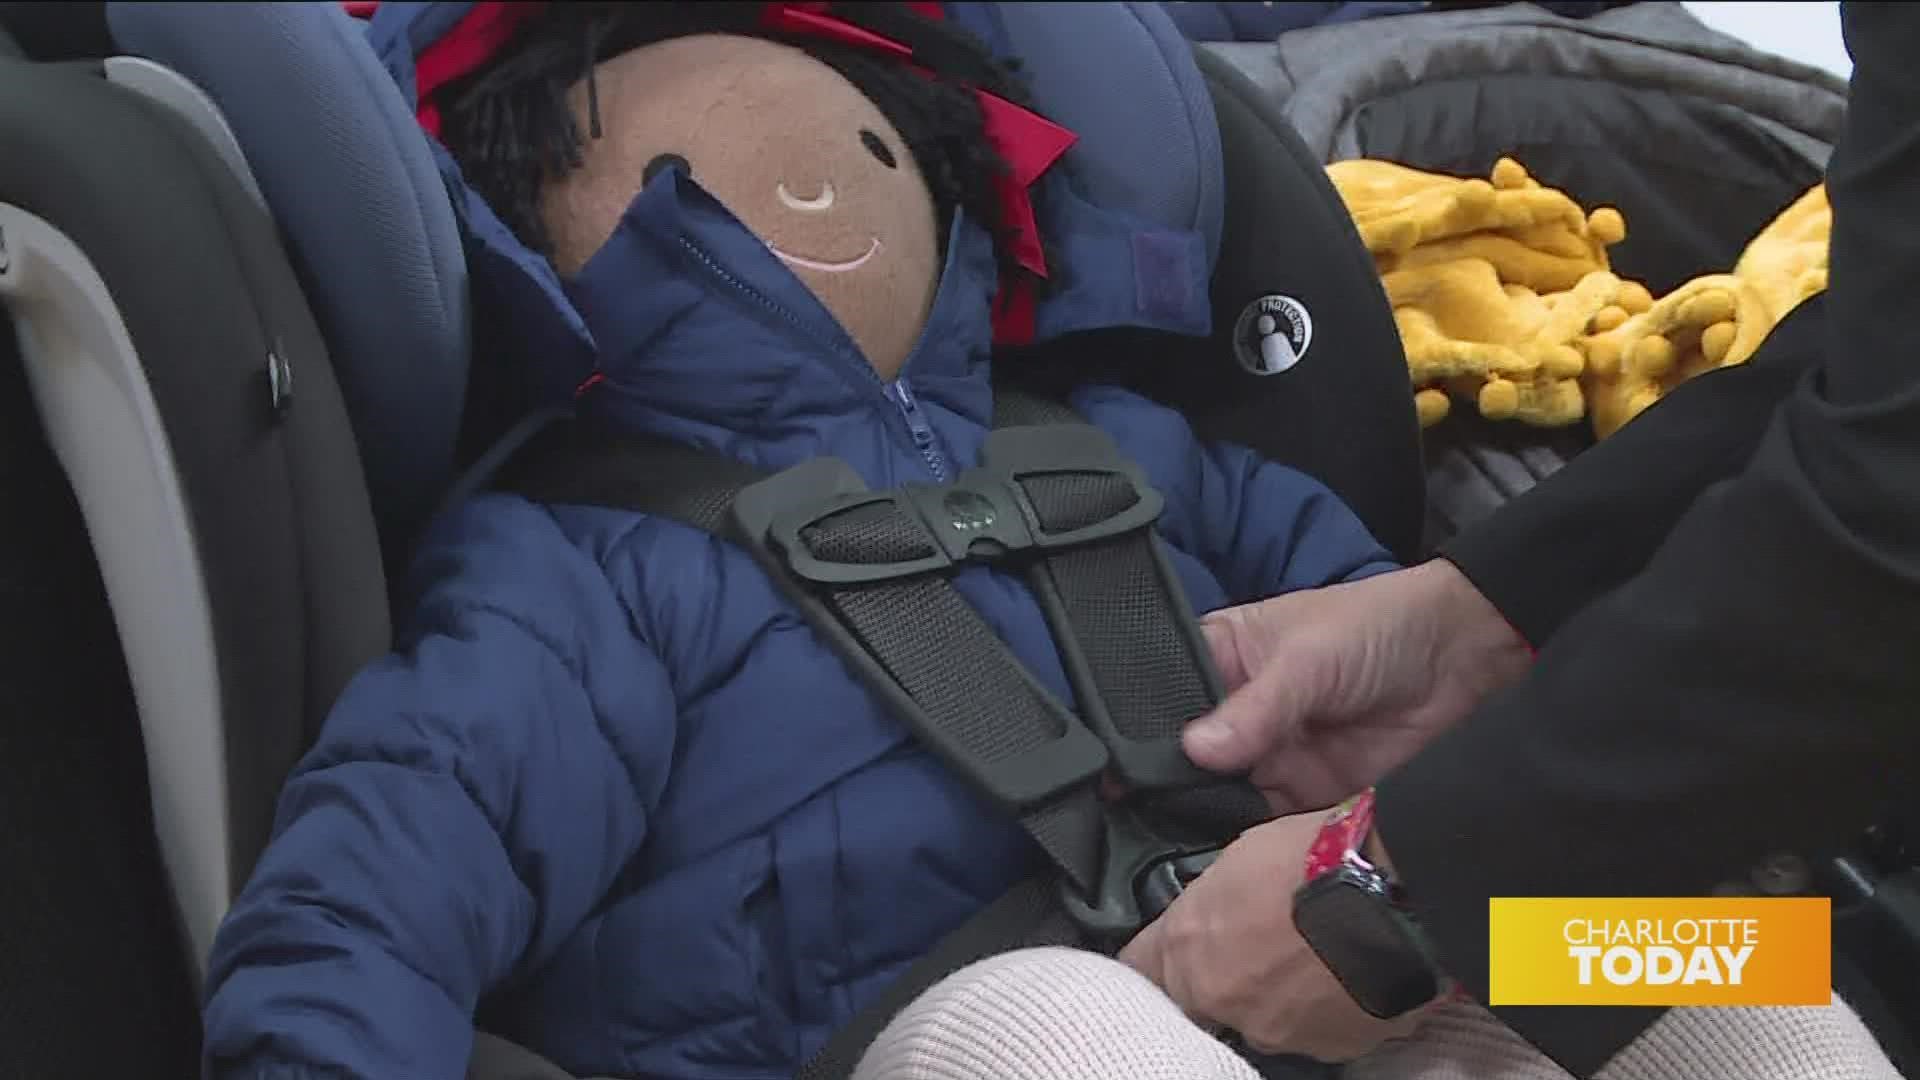 Hidden dangers of Winter Coats and Car Seats